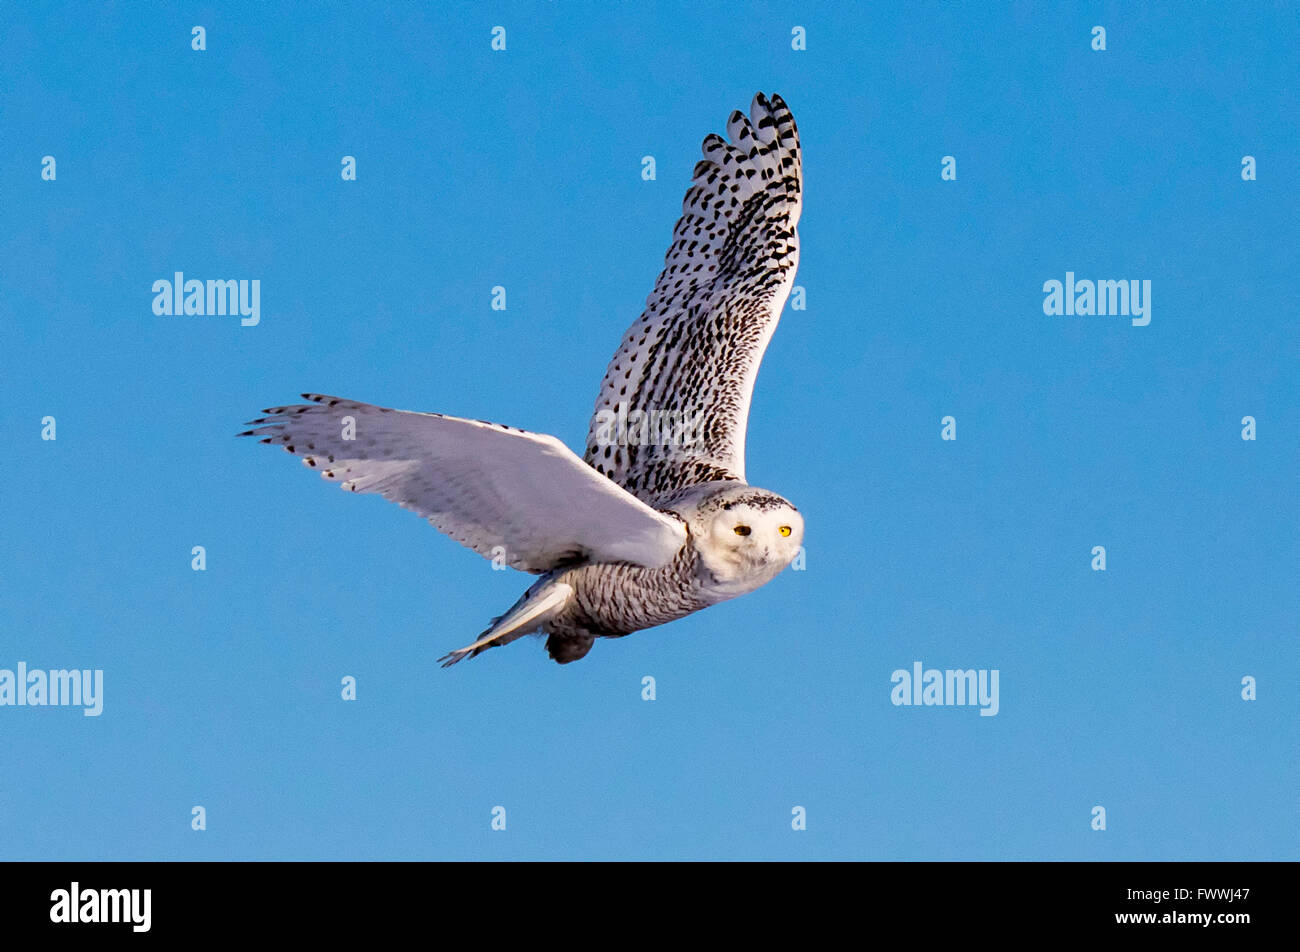 Snowy owl in flight Stock Photo